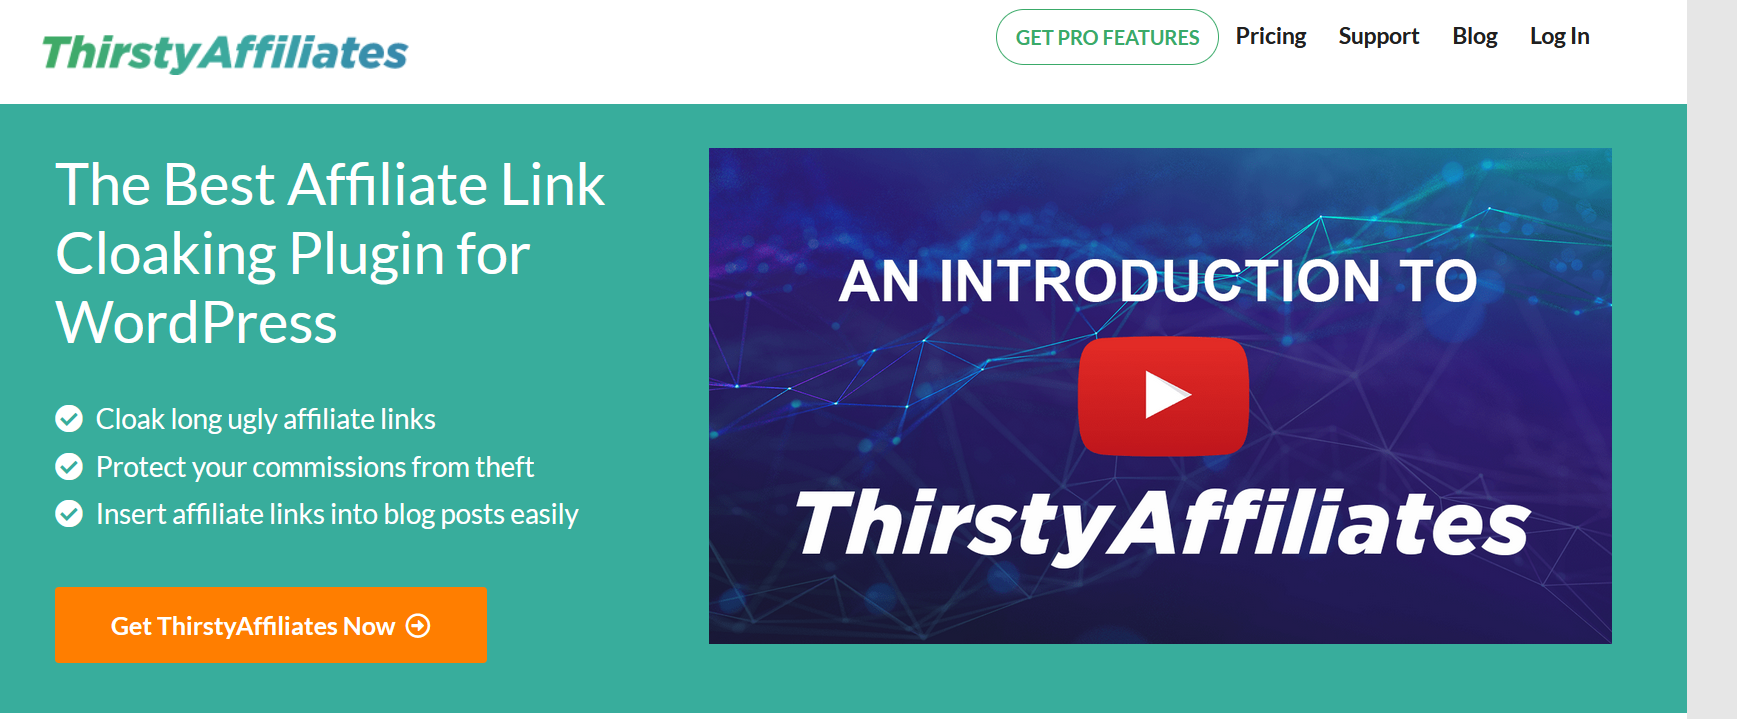 ThirstyAffiliates Affiliate Link Cloaking Plugin Review